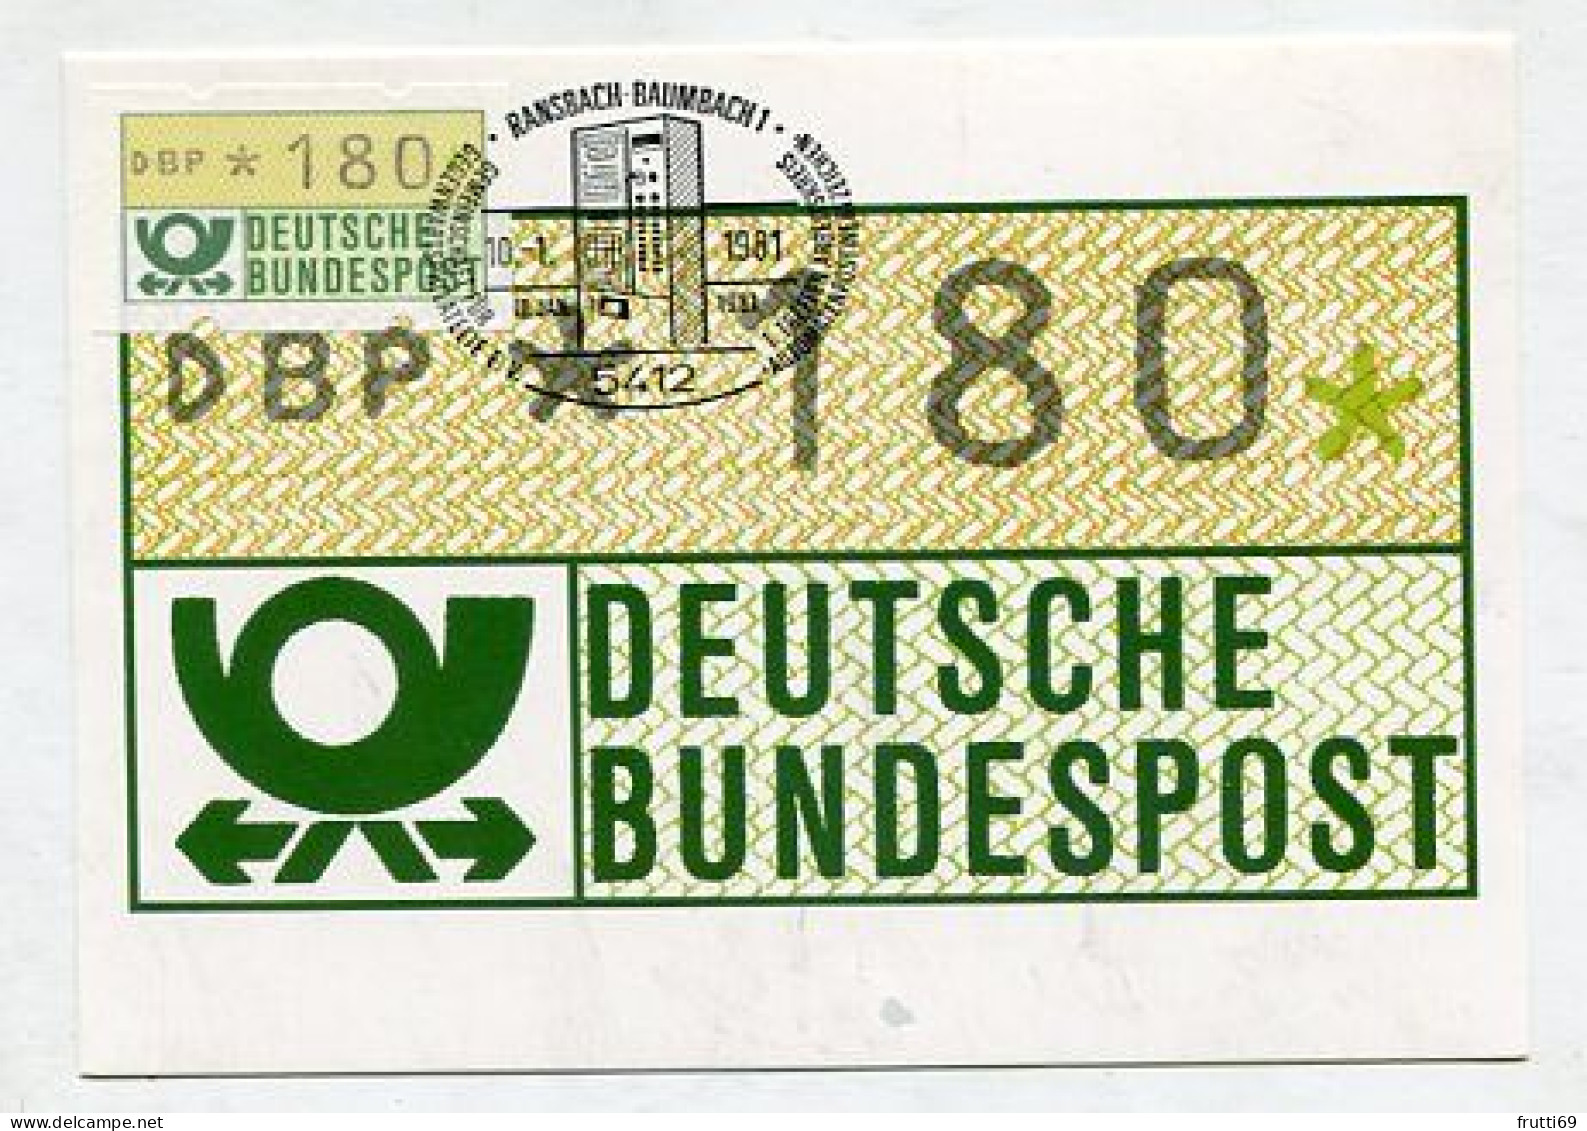 MC 211899 GERMANY - 1981 - Automaten-Postwertzeichen - 1981-2000